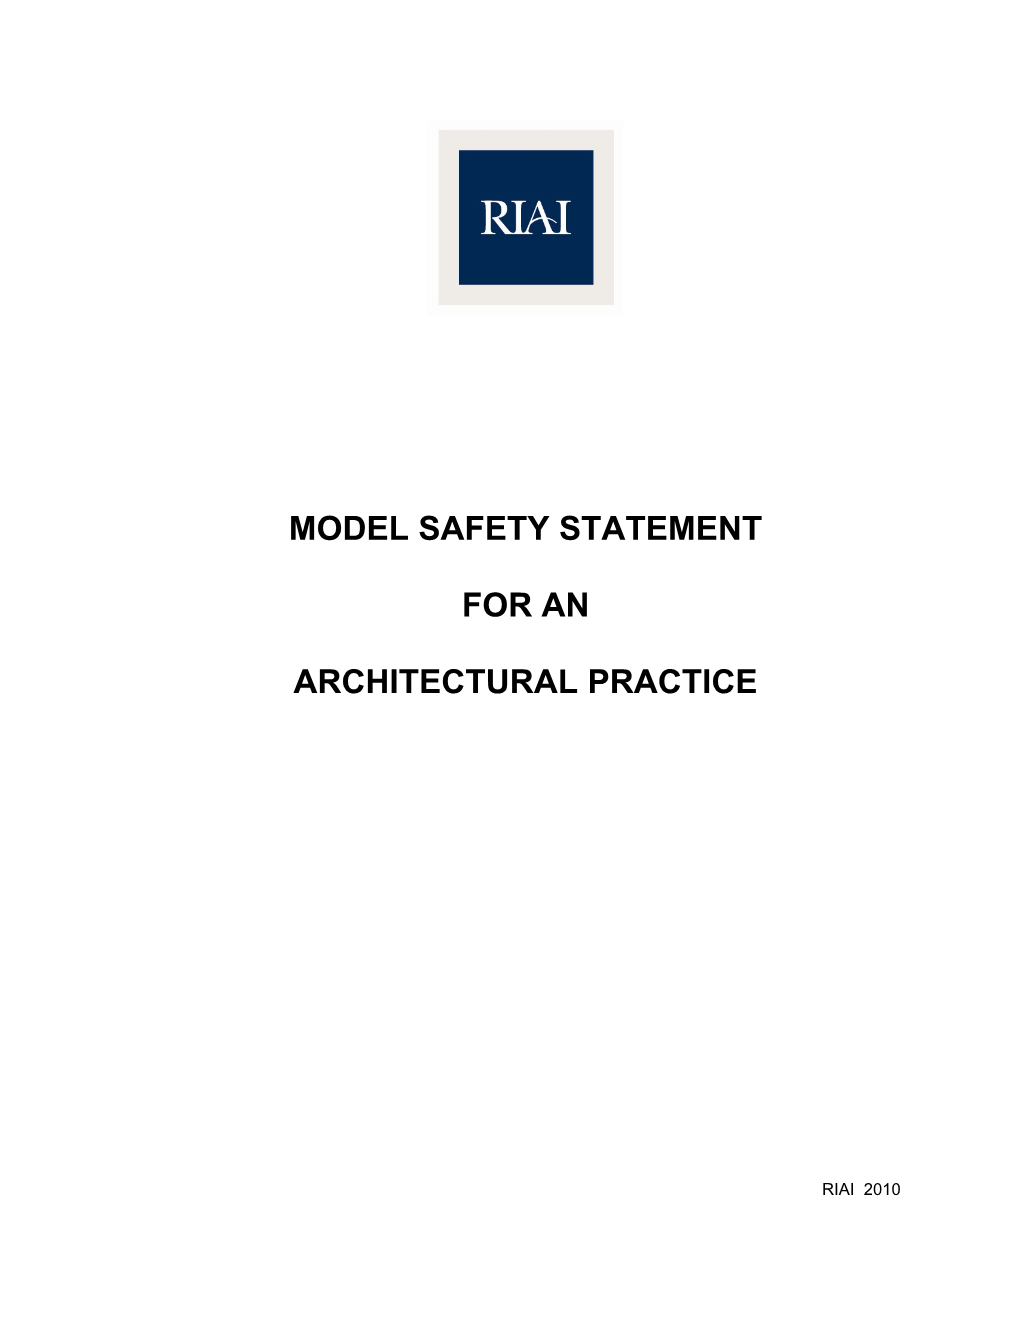 Model Safety Statement